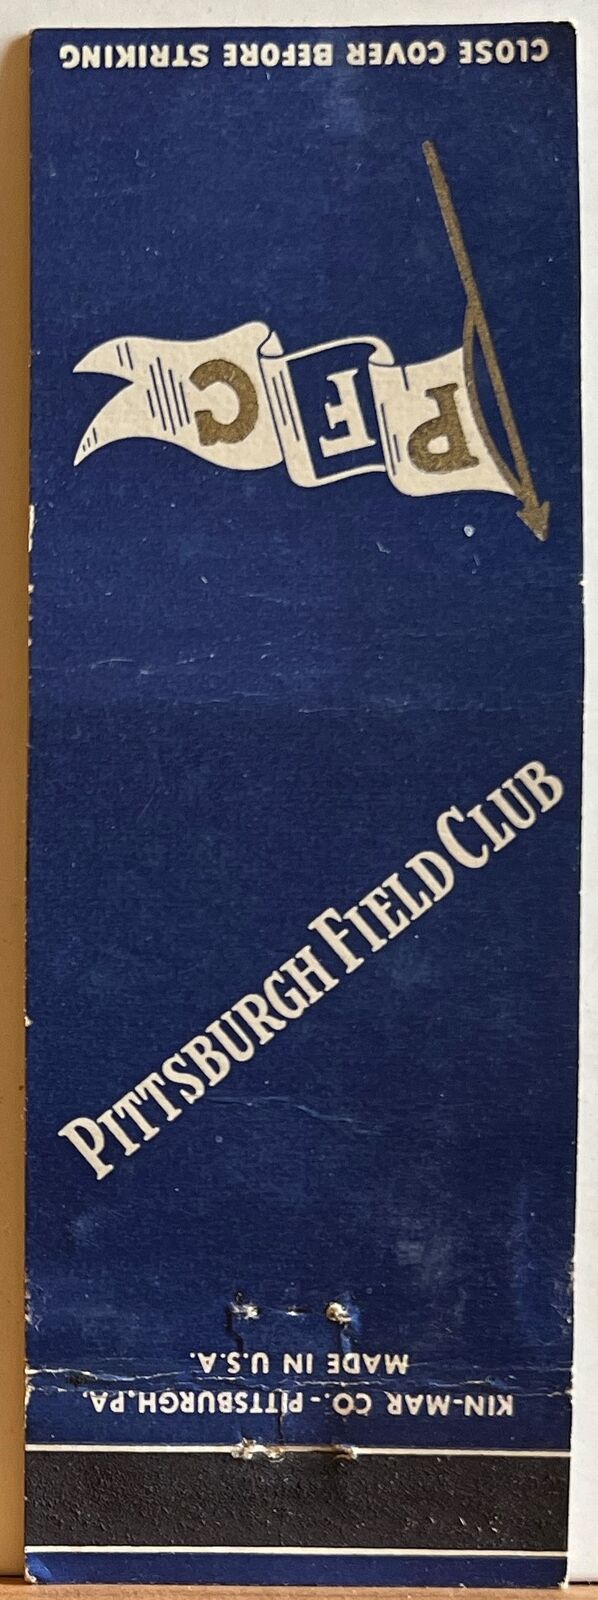 PFC Pittsburgh Field Club Pittsburgh PA Pennsylvania Vintage Matchbook Cover